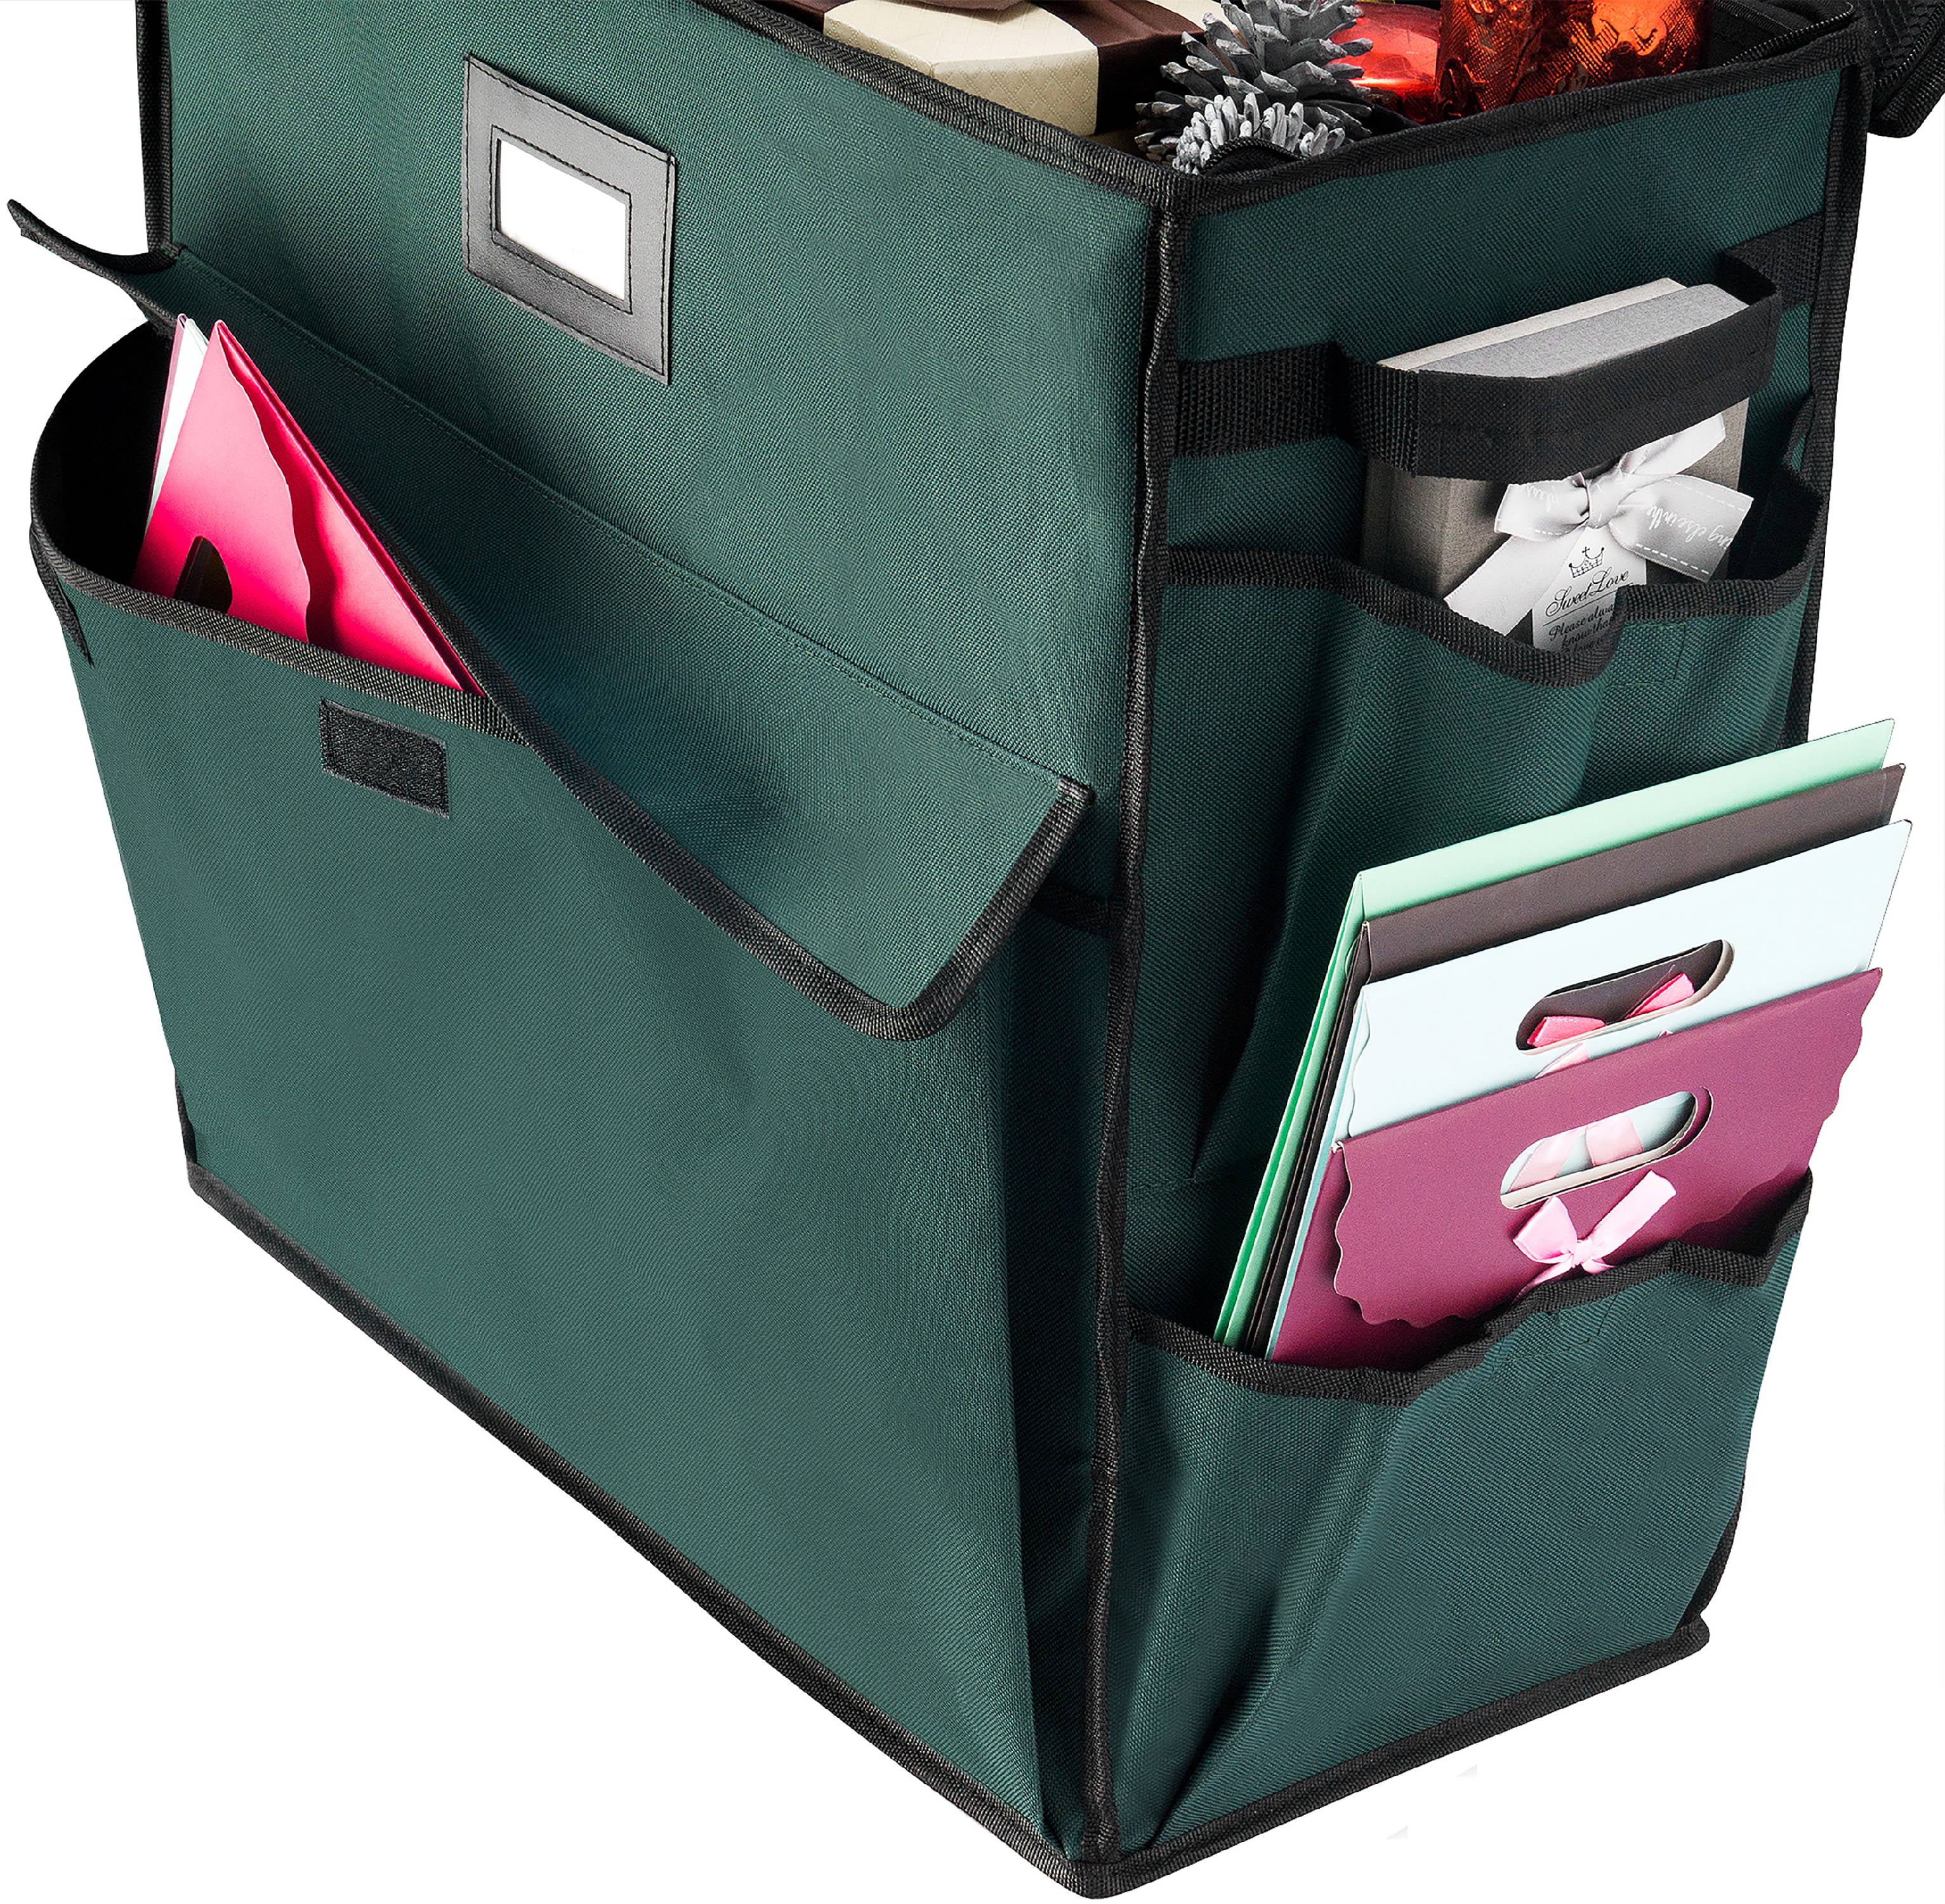 Elf Stor Ultimate Gift Bag Organizer-Green, 21